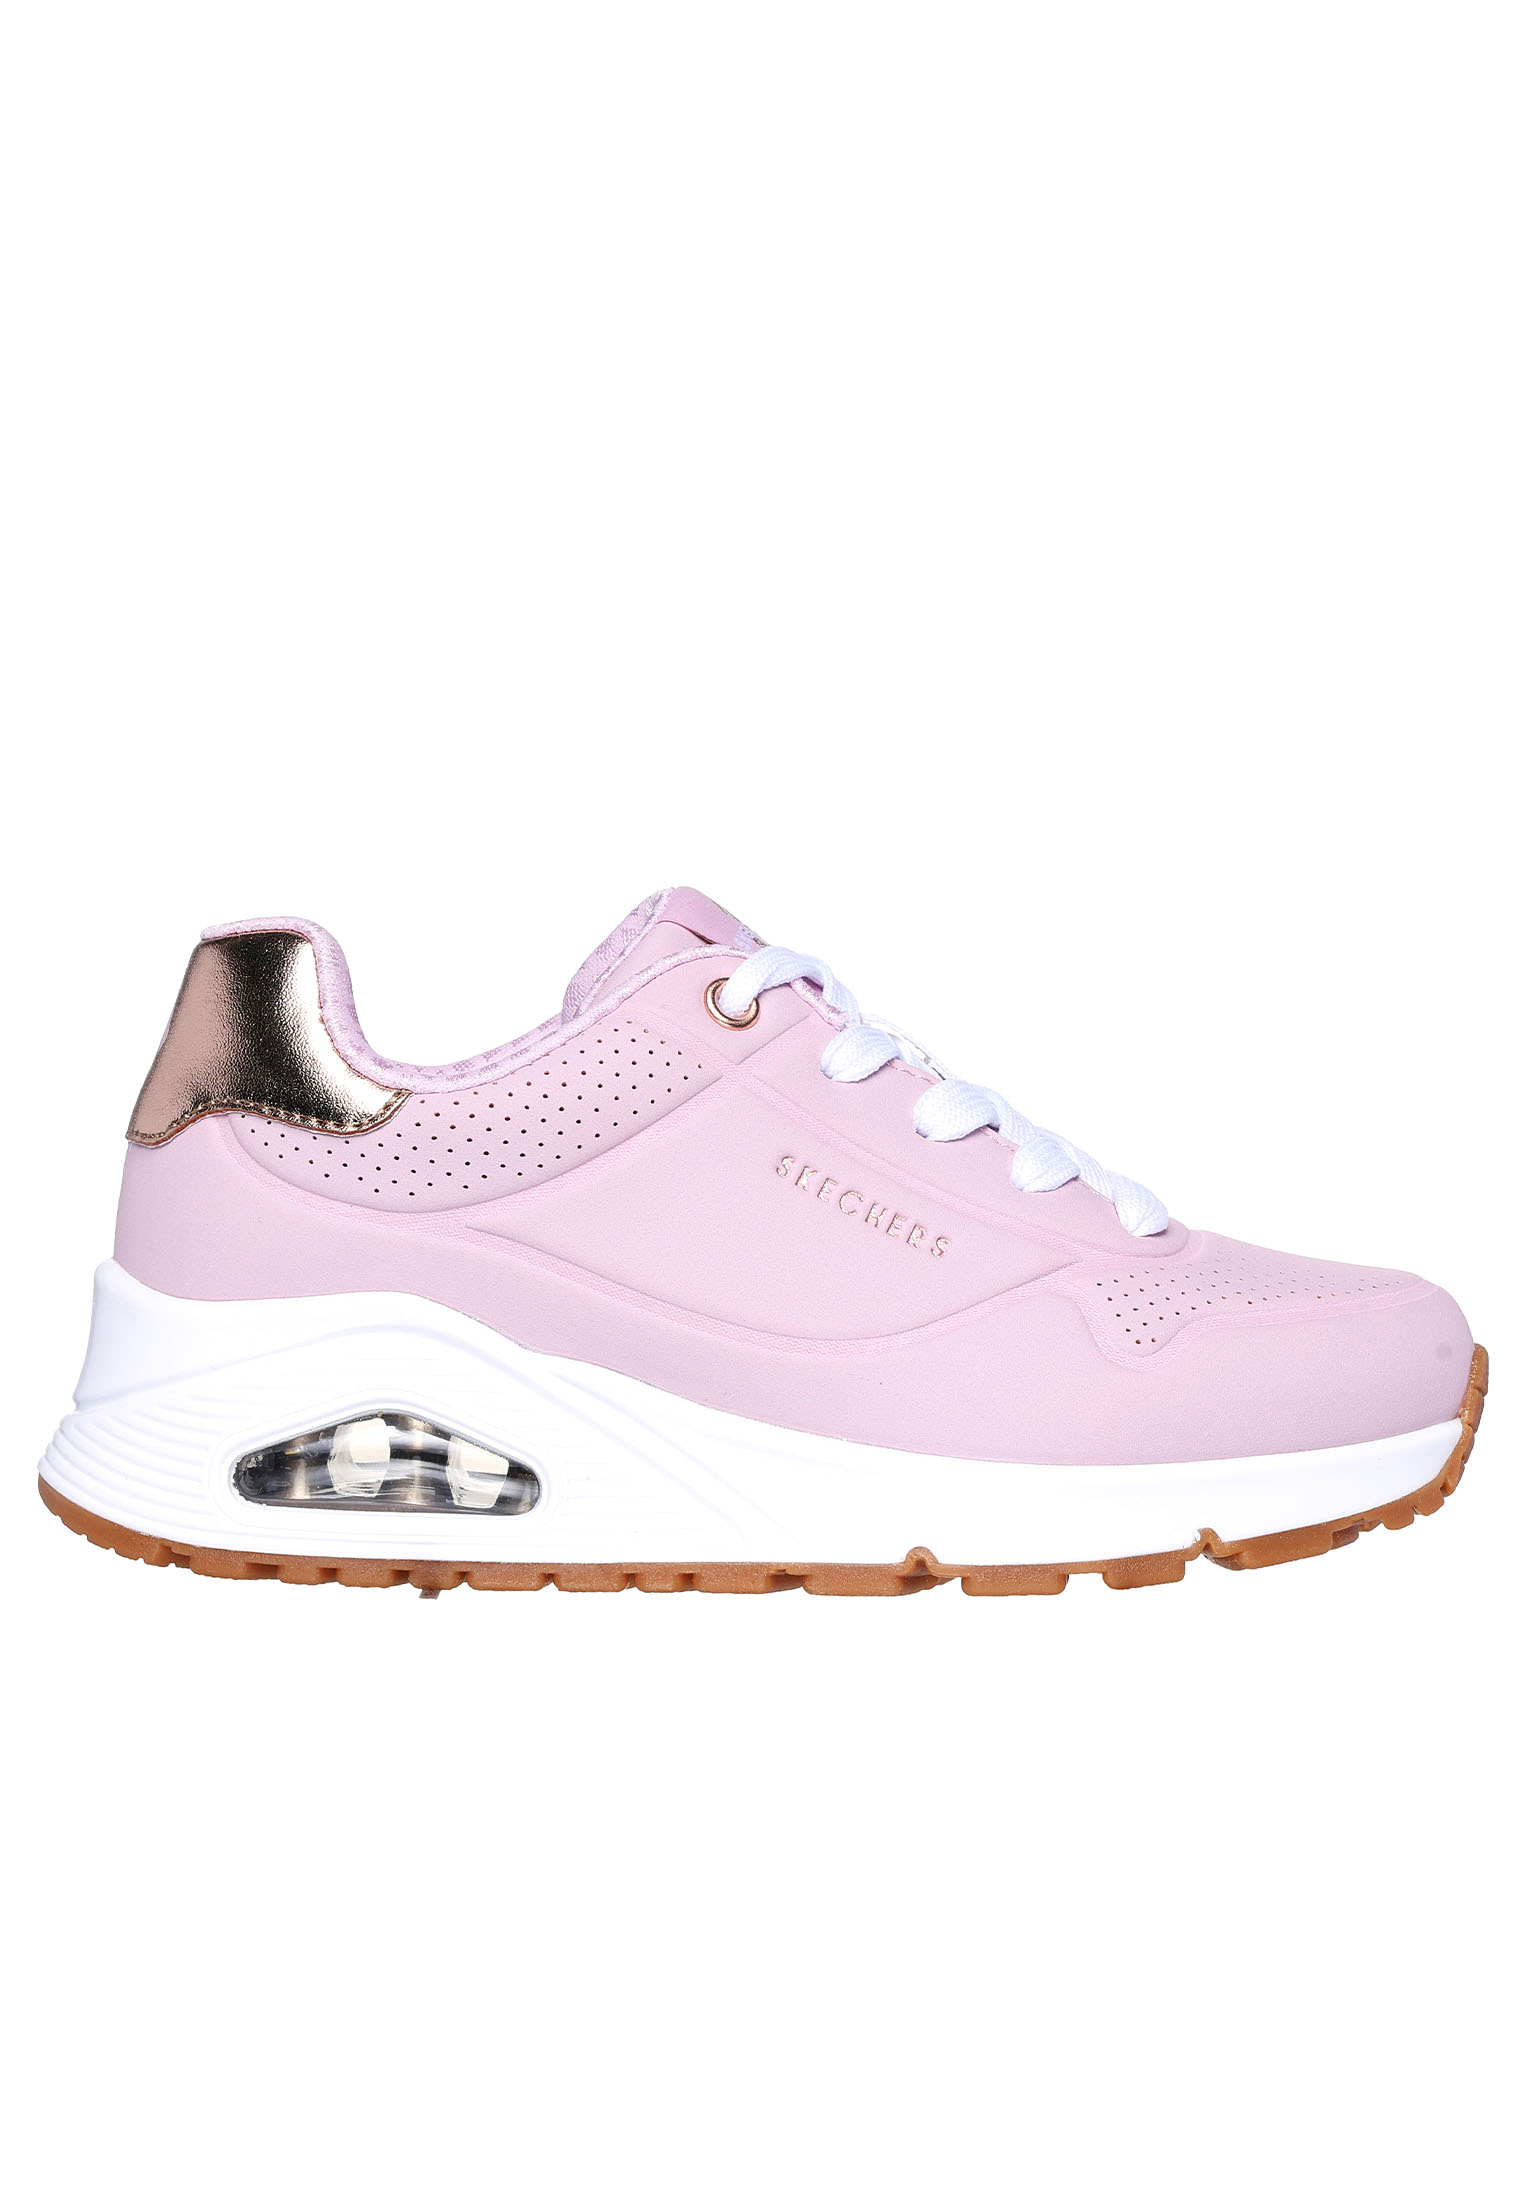 Skechers Uno Gen1 - Shimmer Away Meisjes Sneakers - Roze - Maat 29